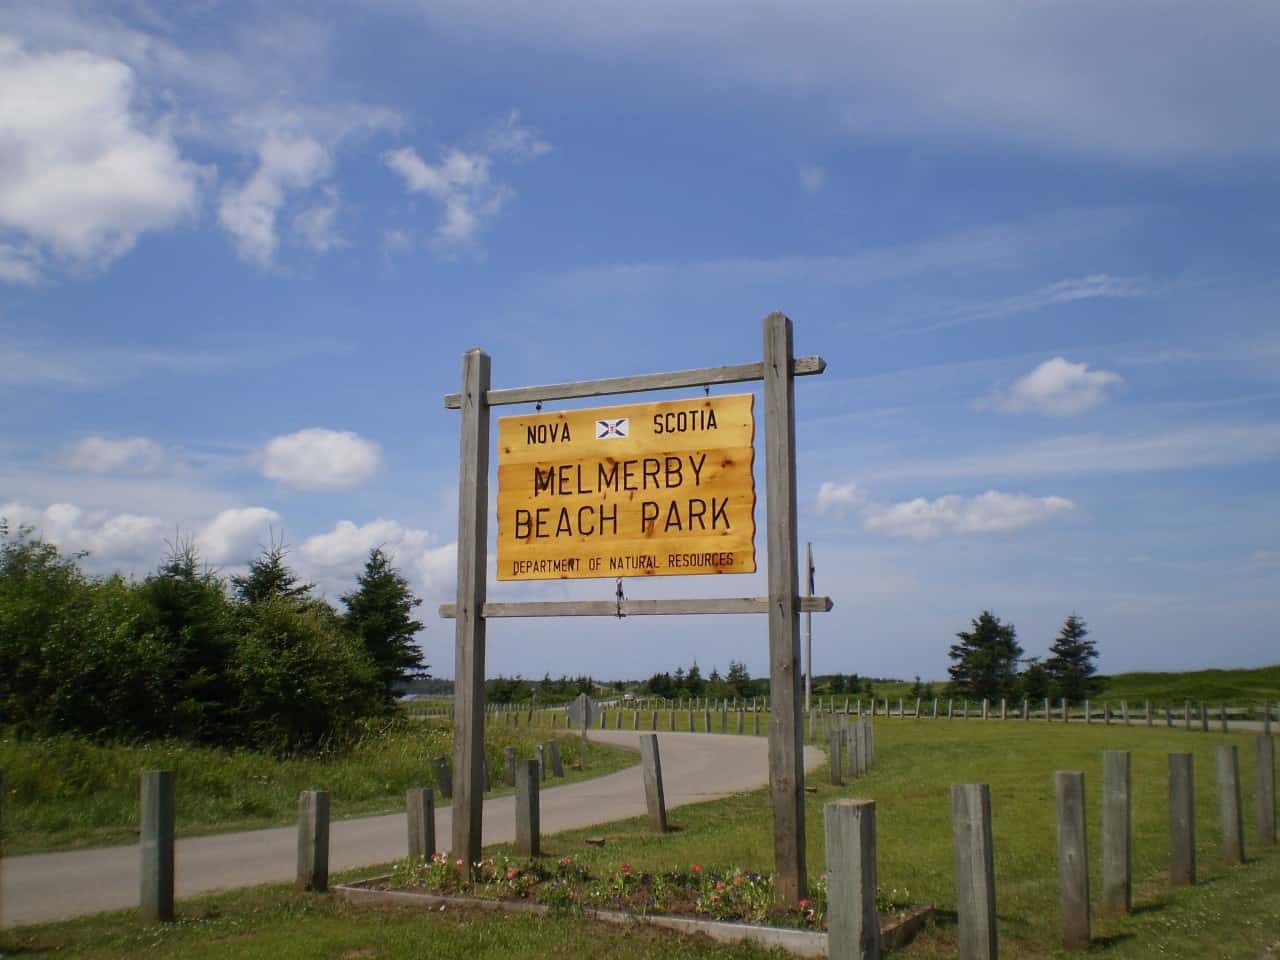 Welcome to Melmerby Beach Park - The entrance welcome sign as we enter the Melmerby Beach Provincial Park in Nova Scotia, Canada. 